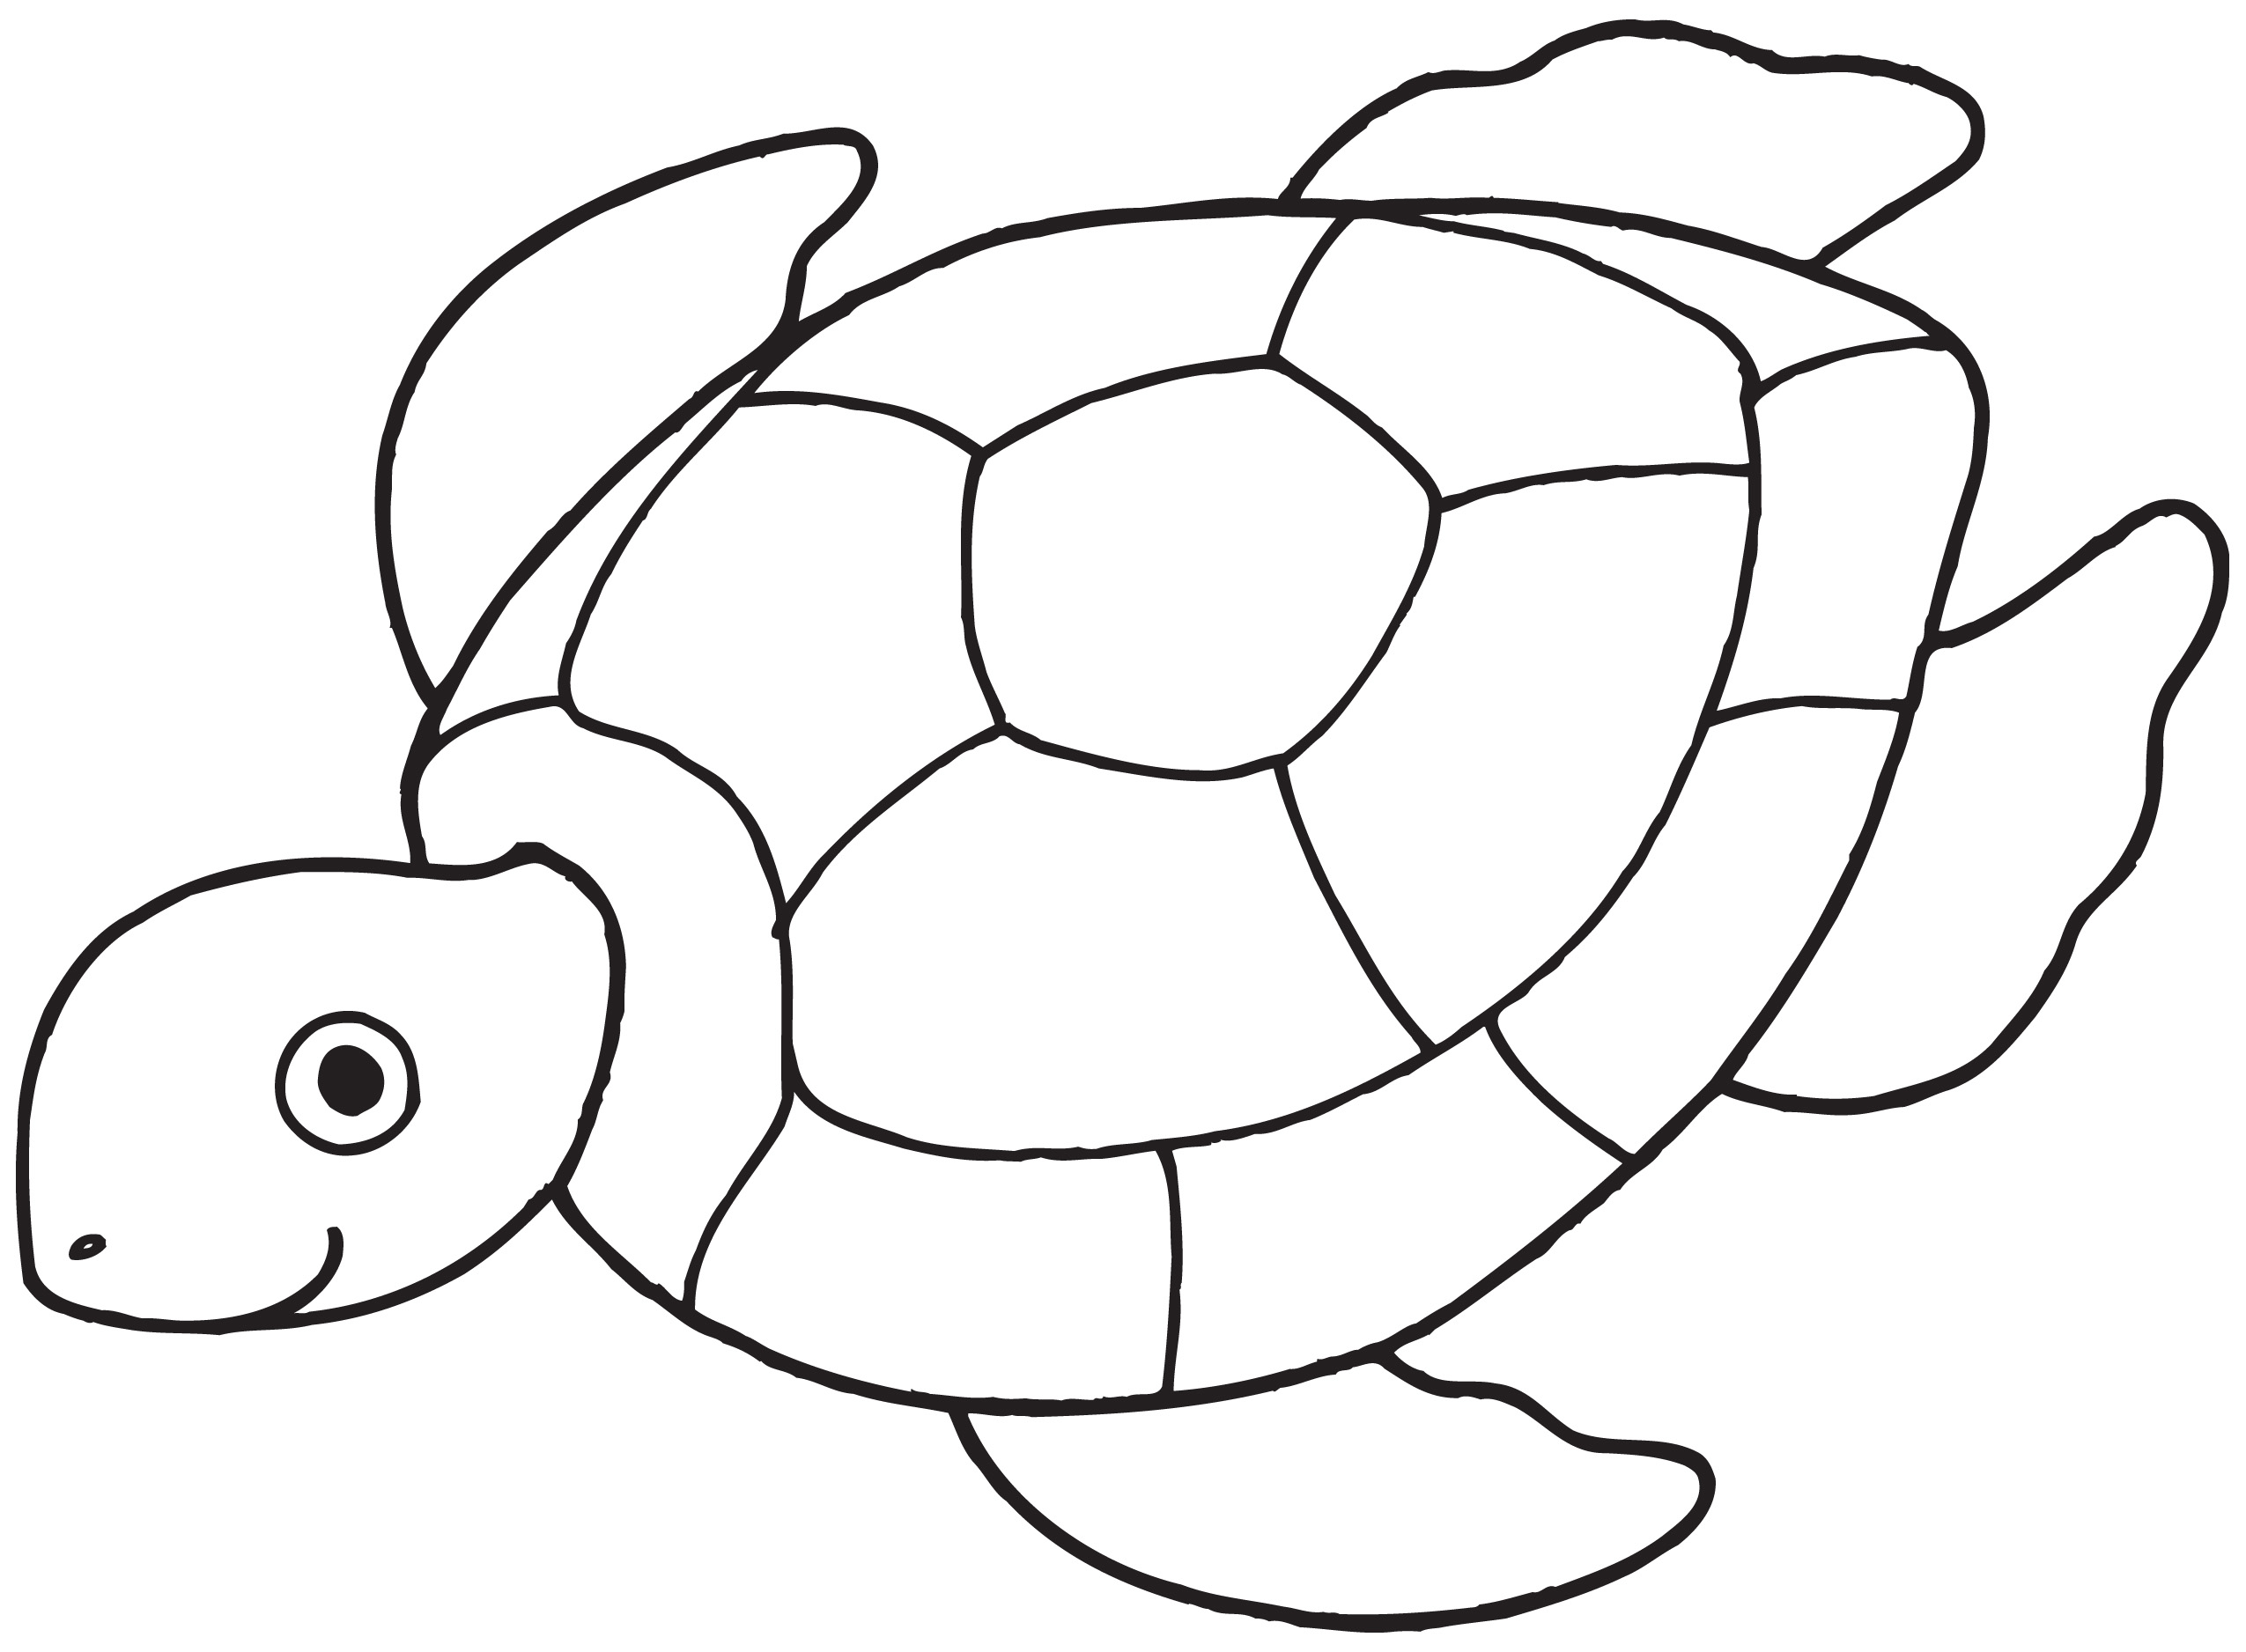 Sea turtle drawingwww.ukirkvcu.com |ukirkvcu.com